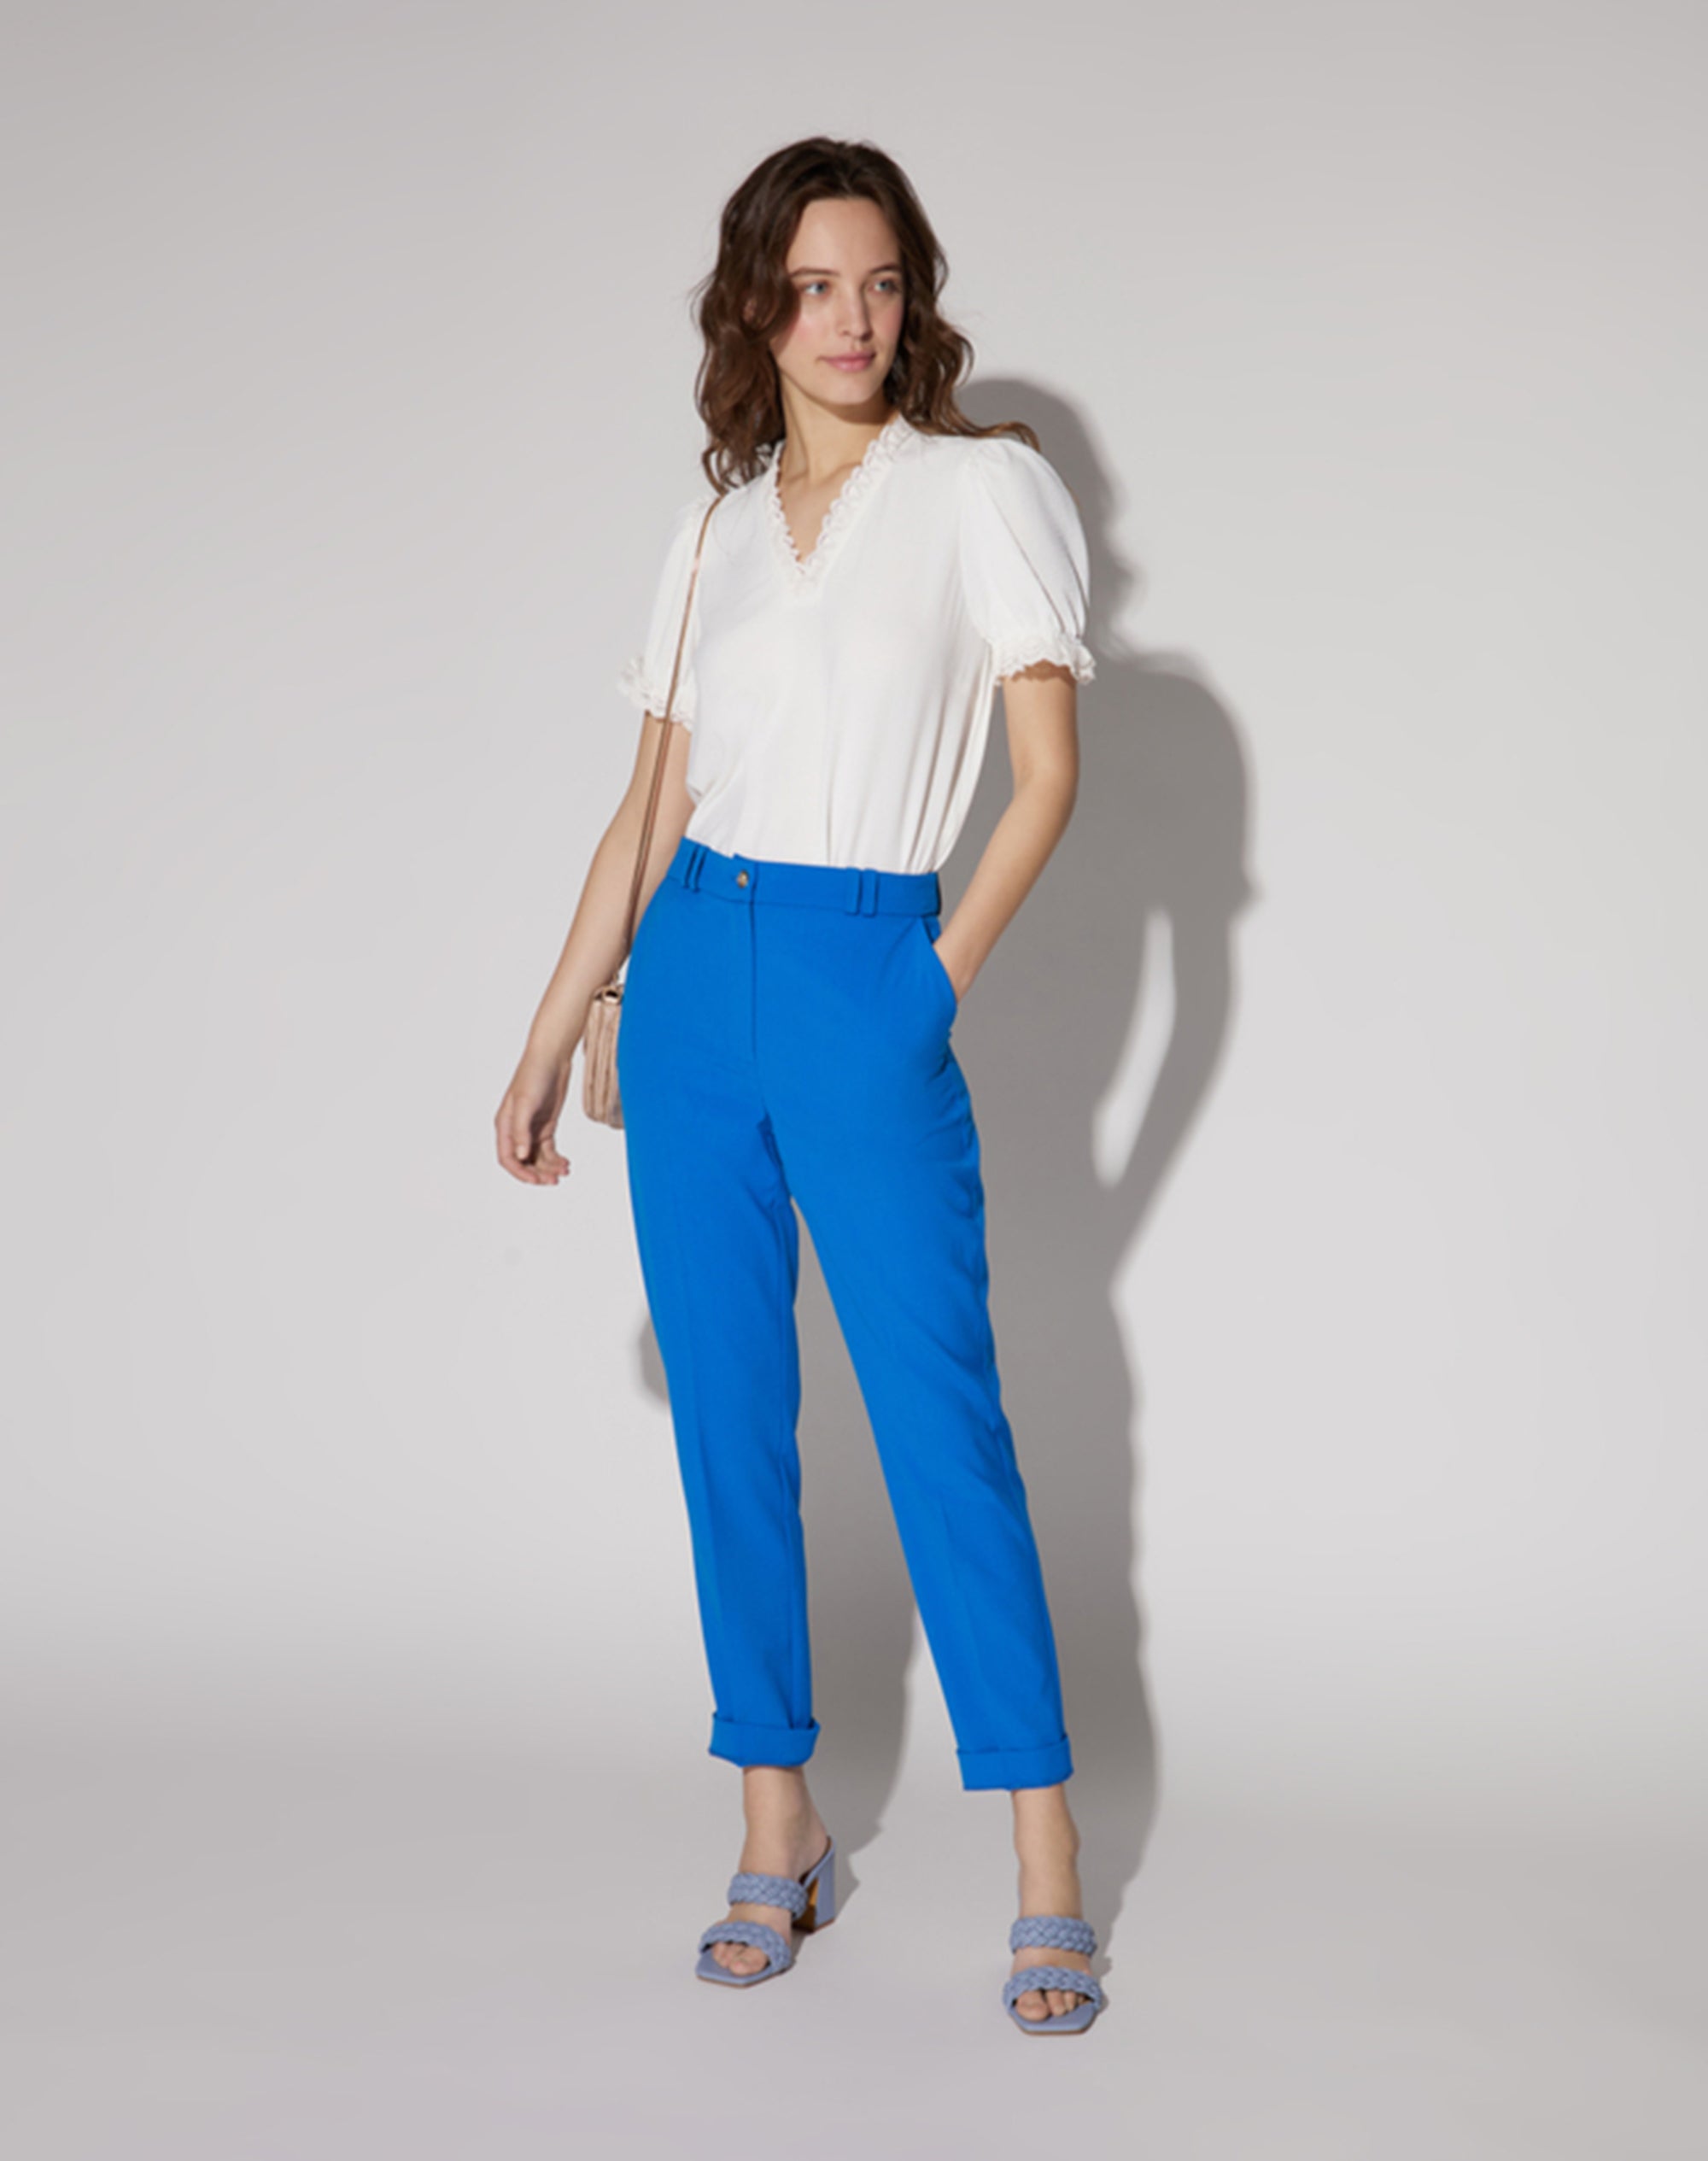 Pantalón Azul para Mujer - Compra Online Pantalón Azul para Mujer